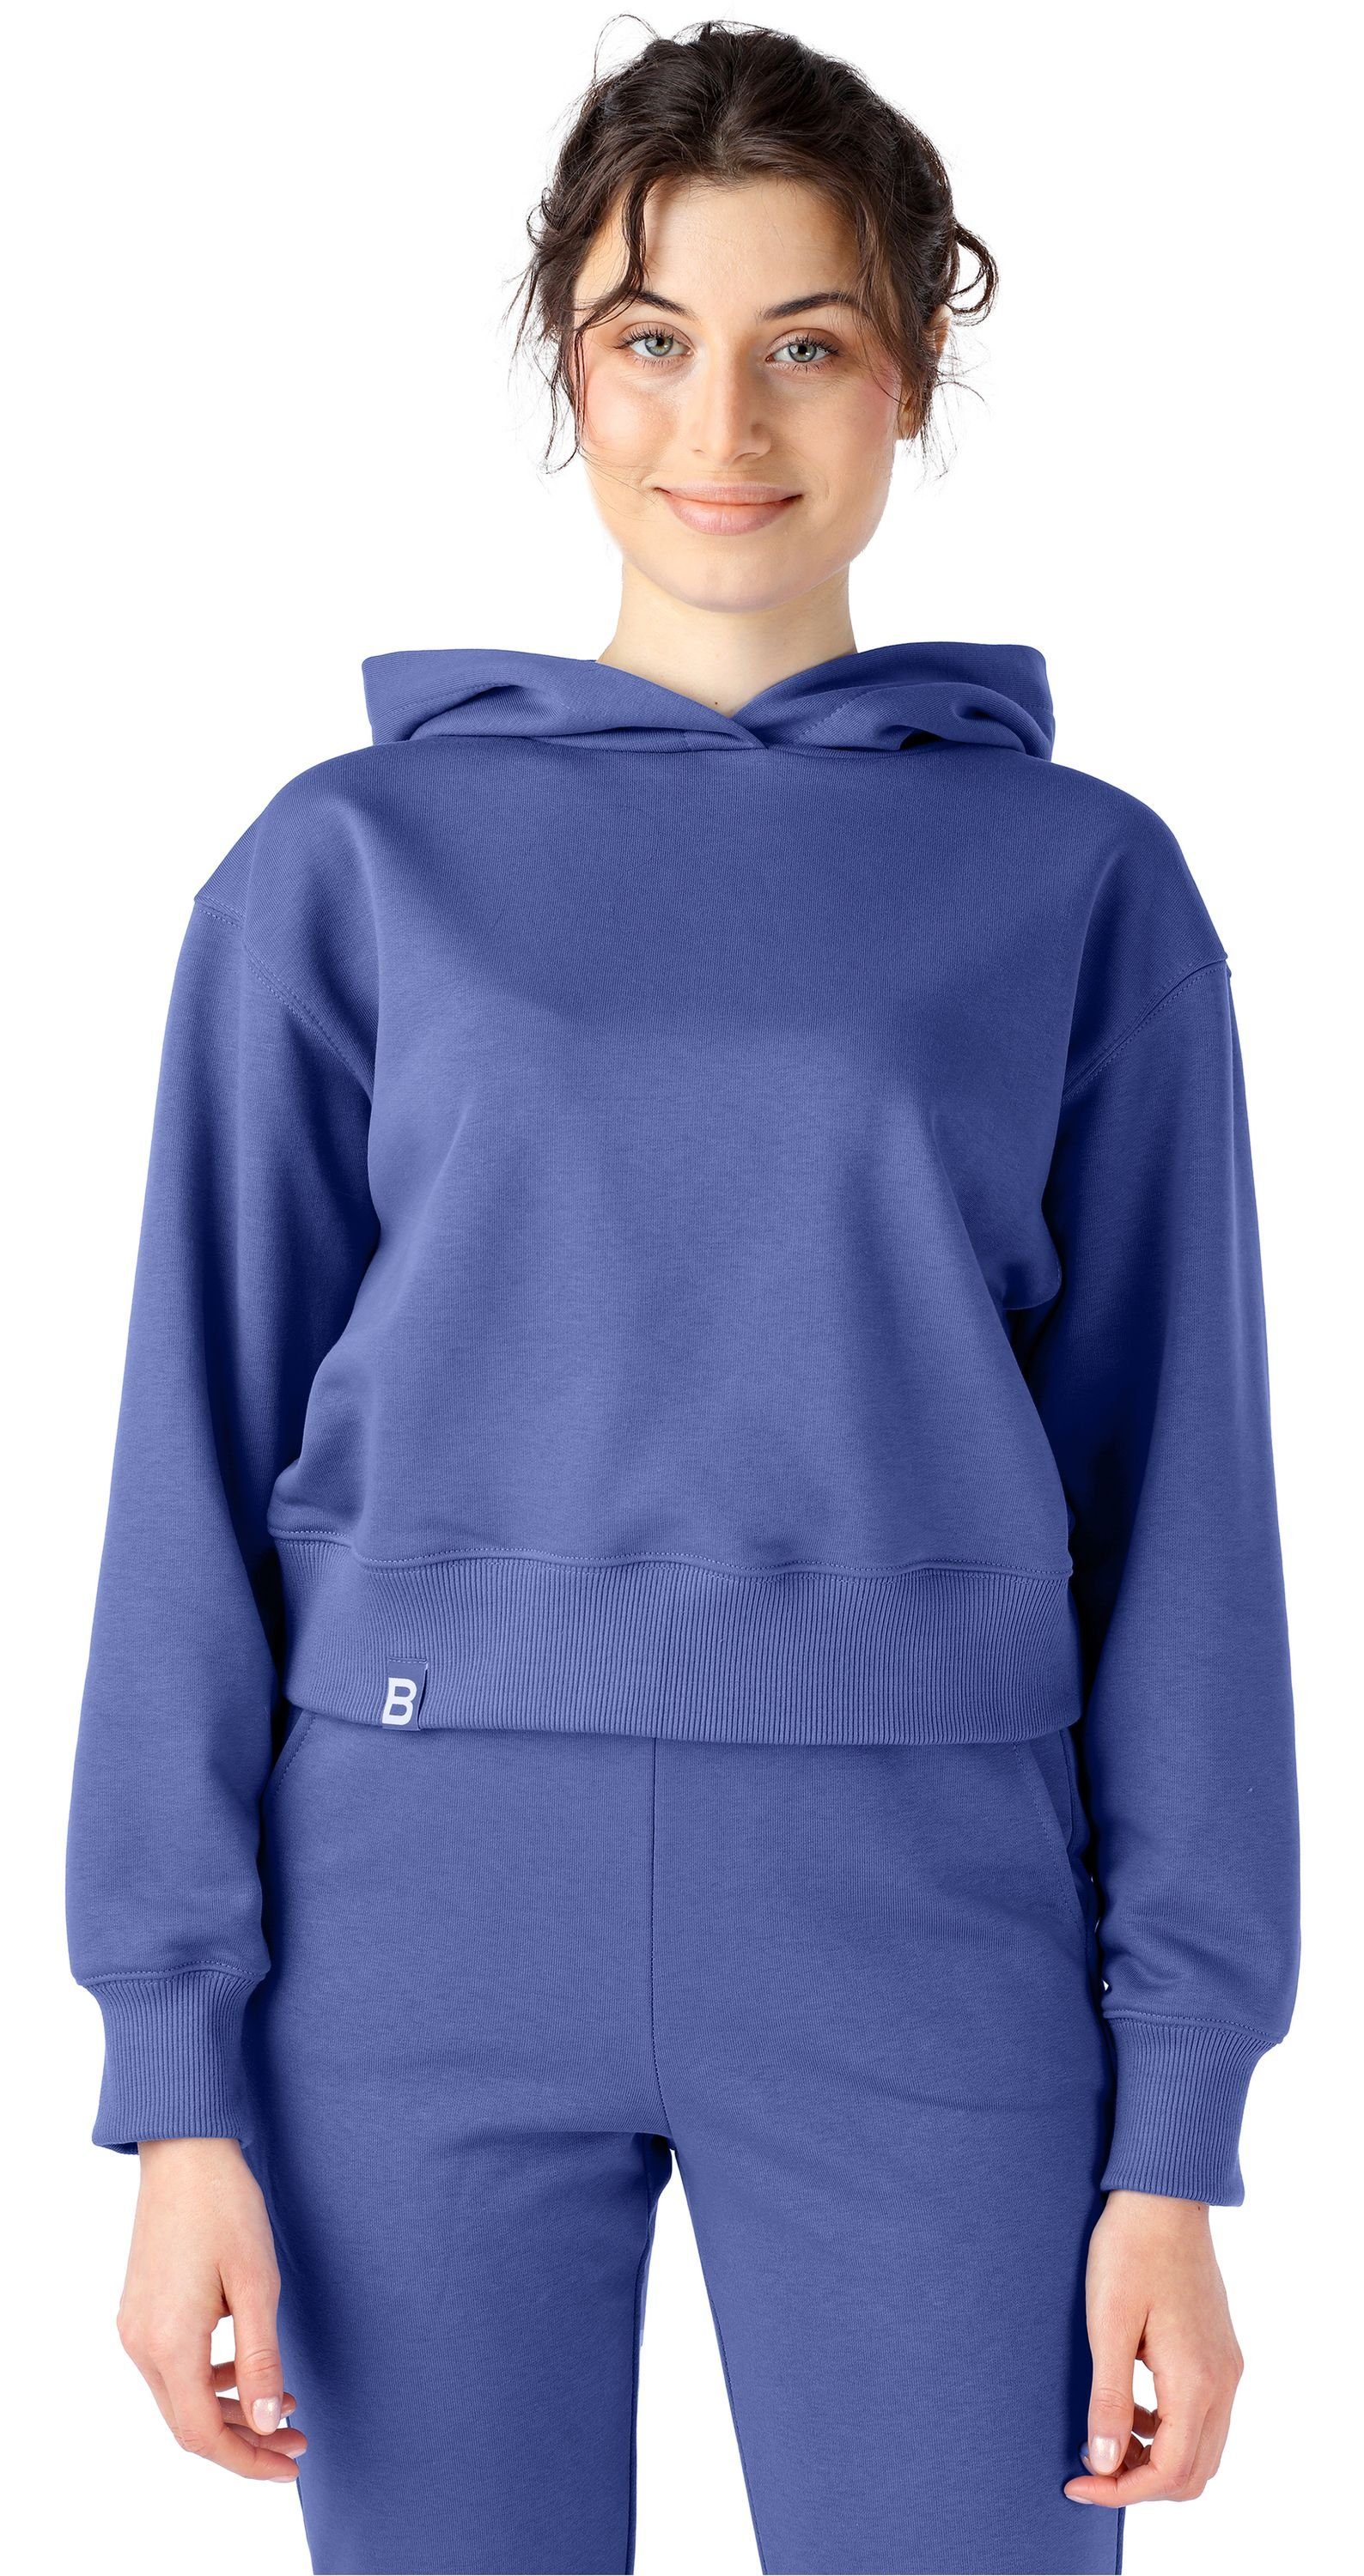 Bellivalini Kapuzensweatshirt Kapuzenpullover kurz Damen Sportanzug Oberteil Jogging Pullover BLV208 Lila-blau